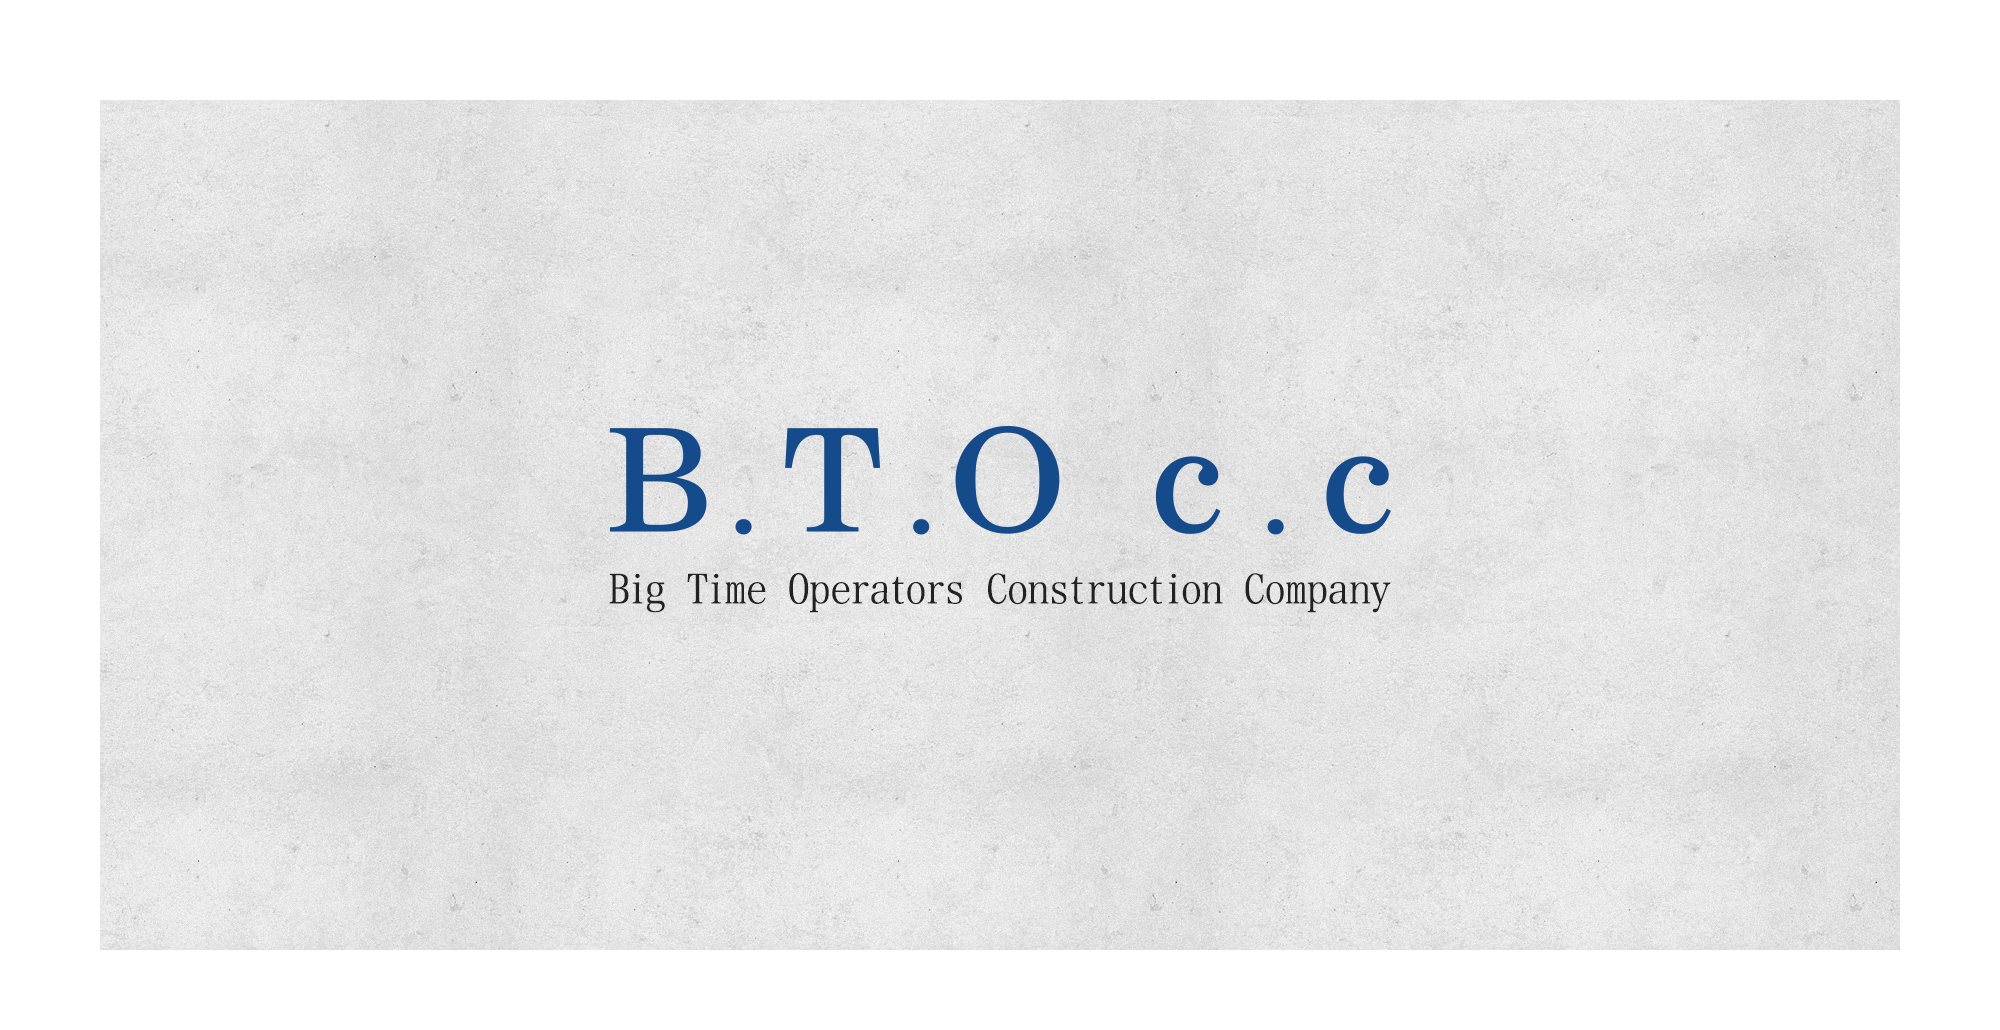  B.T.O c.c Big Time Operators Construction Company